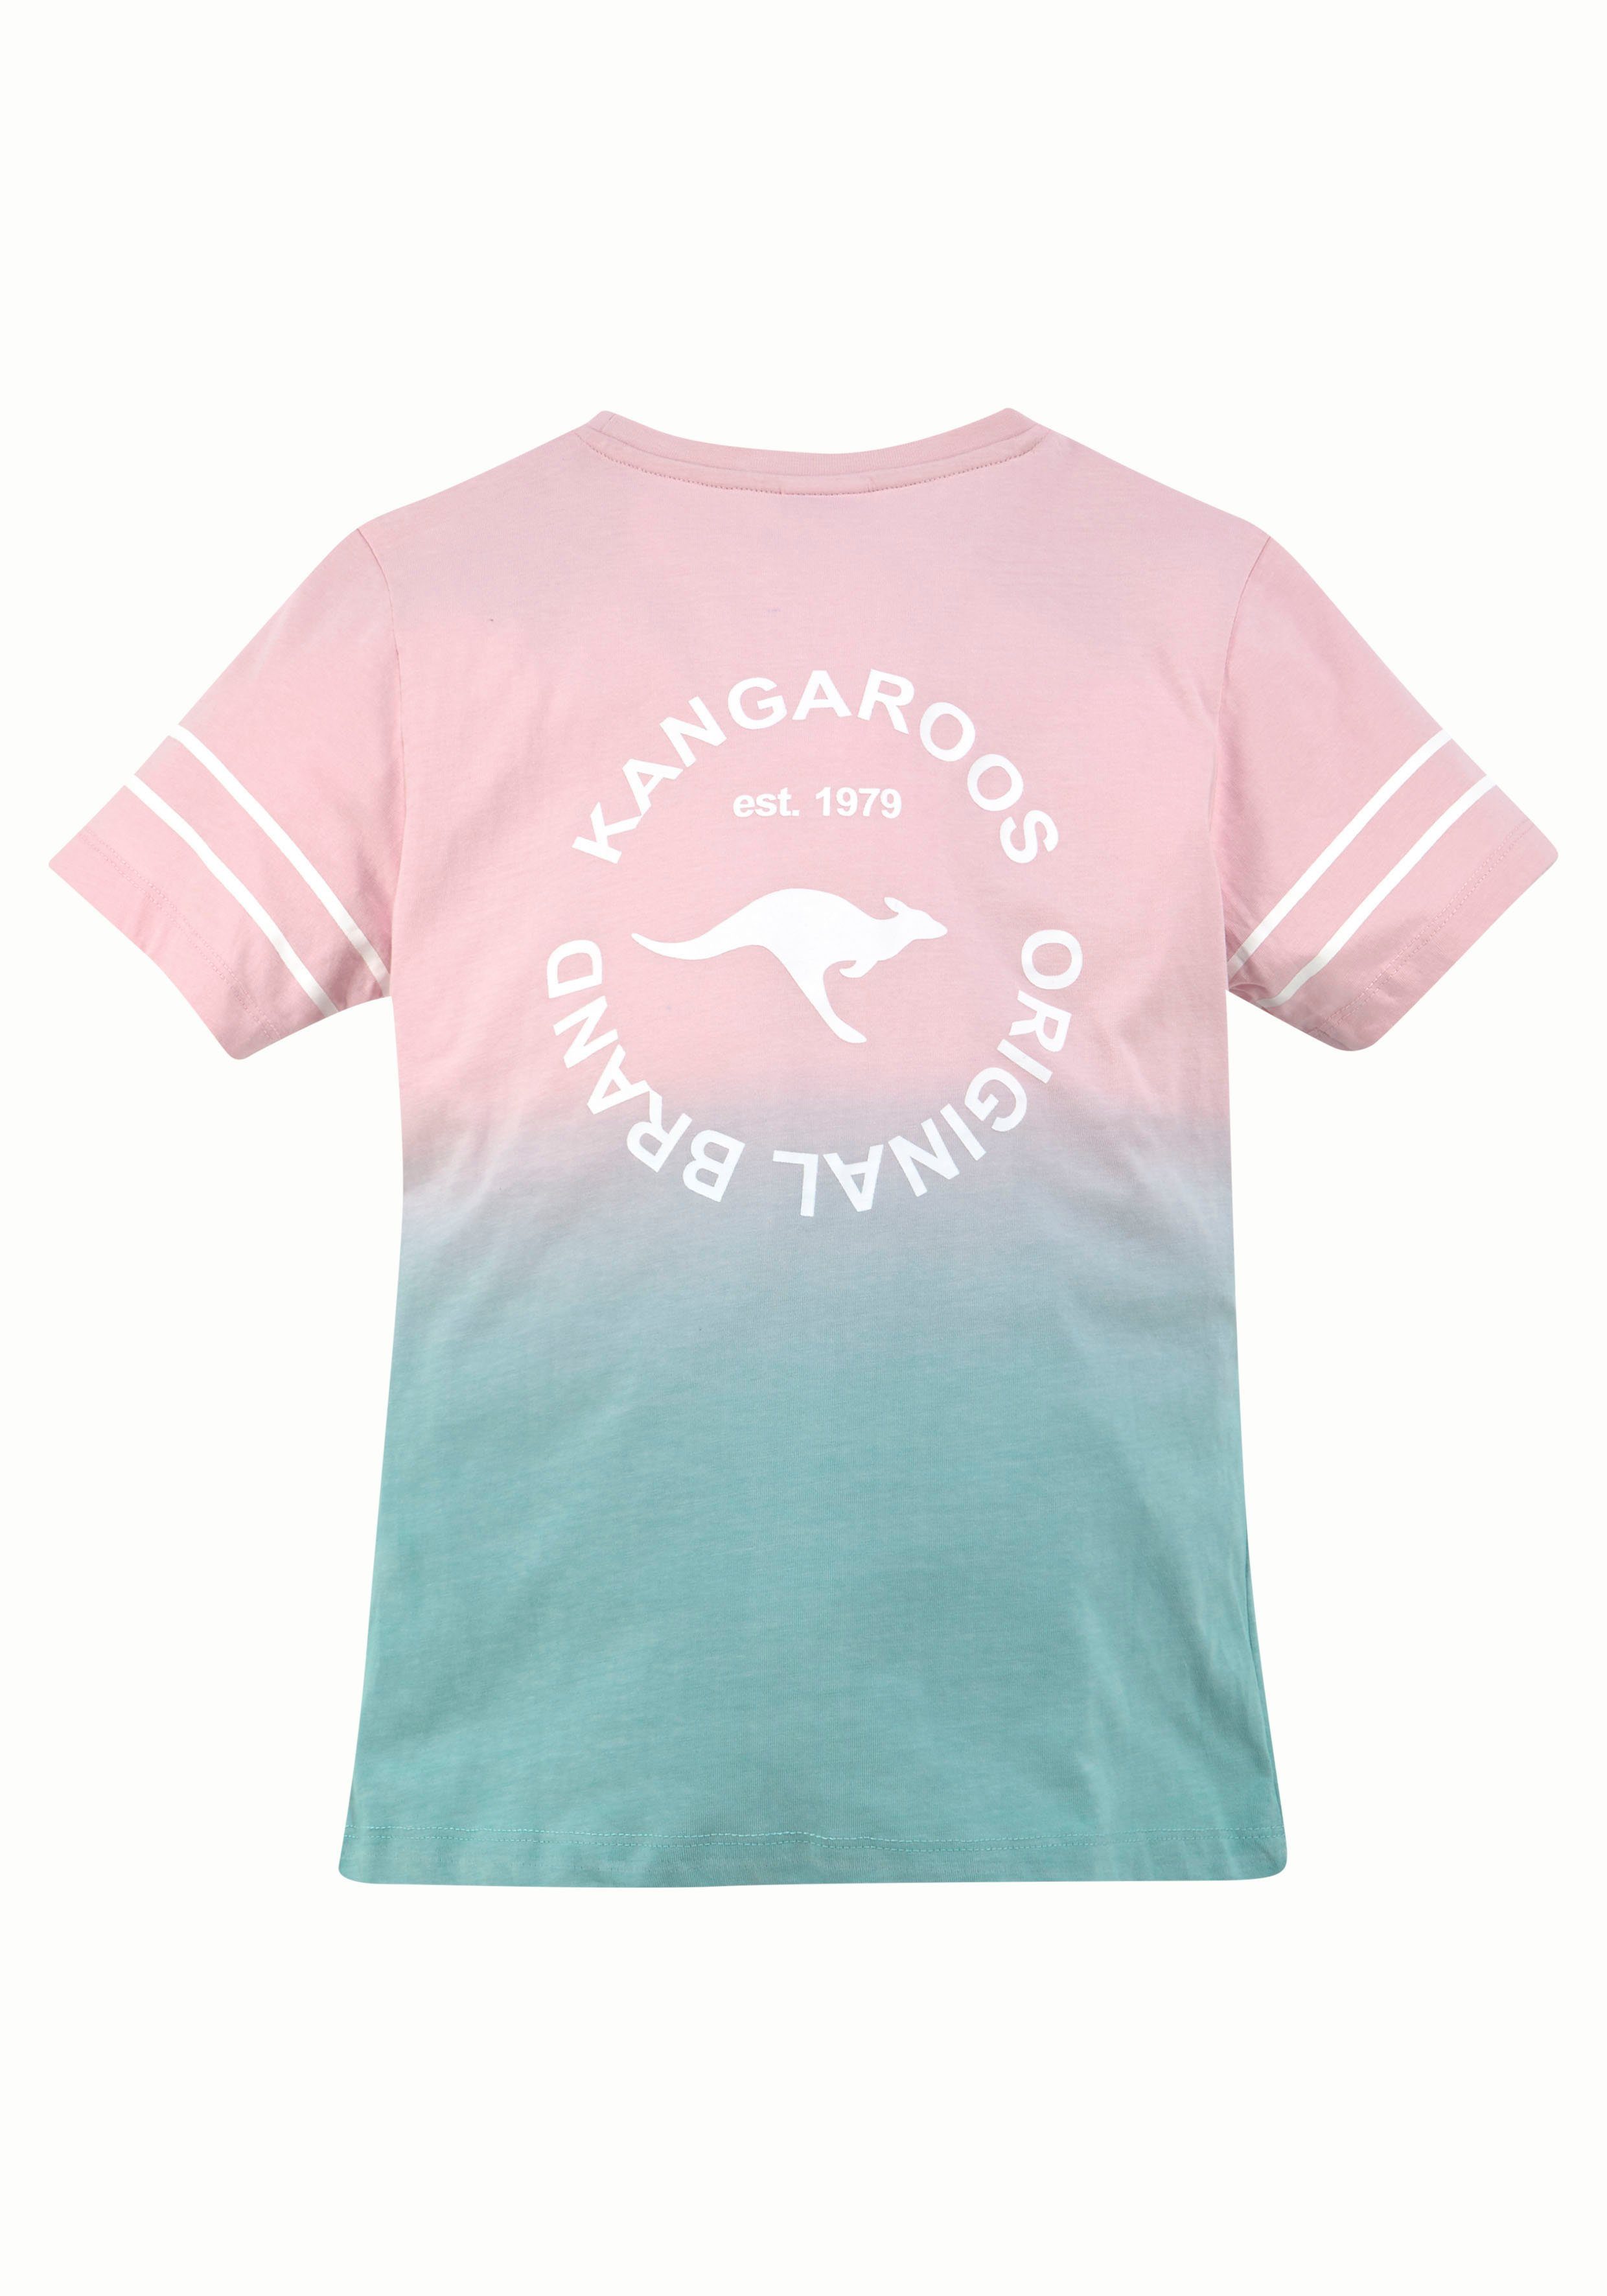 KangaROOS T-Shirt Weite in bequemer